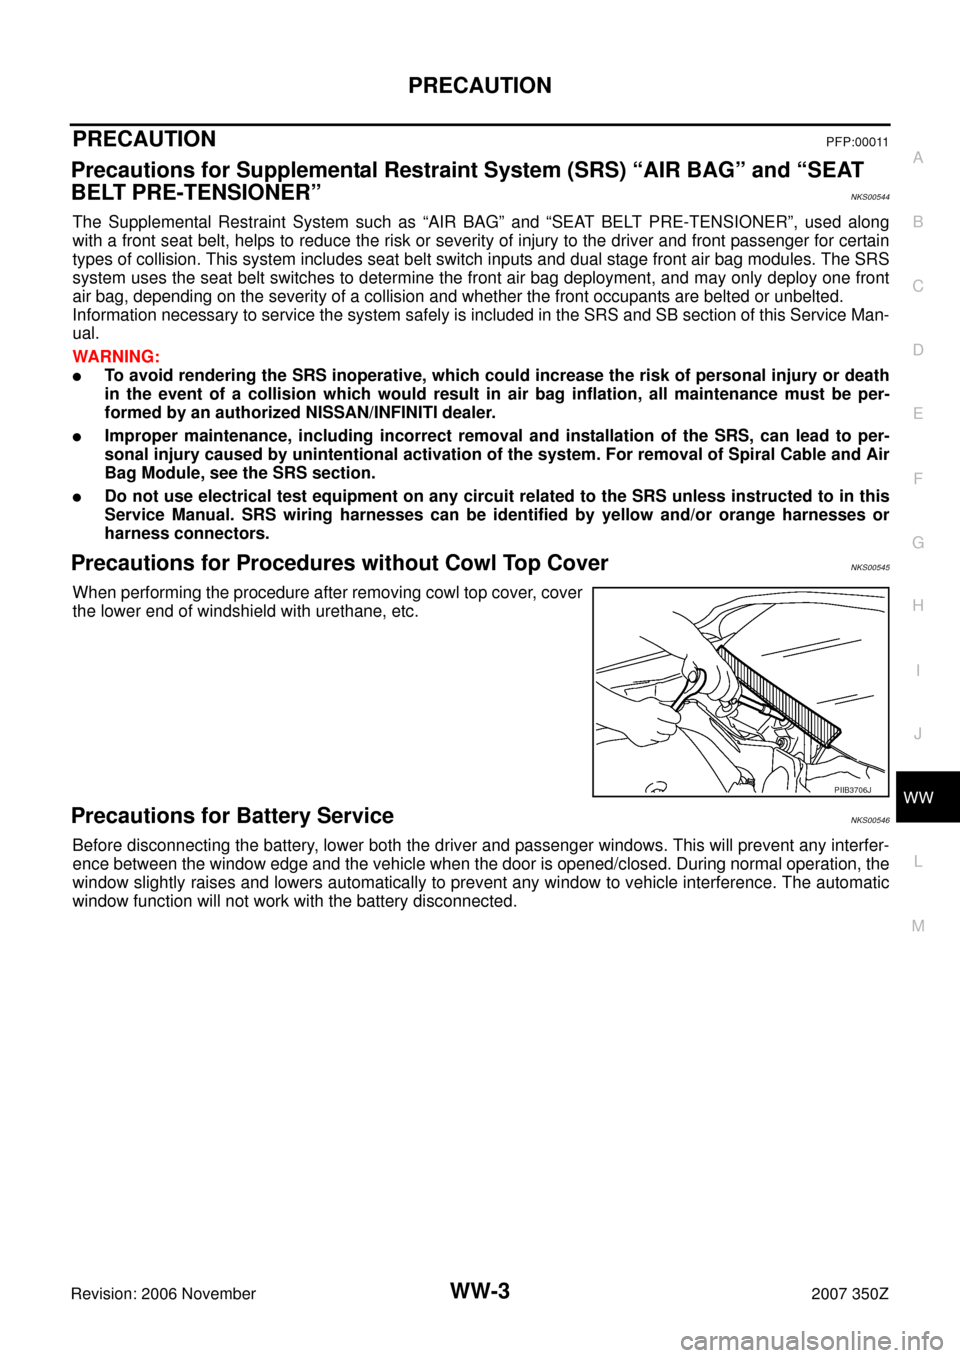 NISSAN 350Z 2007 Z33 Wiper, Washer And Horn Workshop Manual PRECAUTION
WW-3
C
D
E
F
G
H
I
J
L
MA
B
WW
Revision: 2006 November2007 350Z
PRECAUTIONPFP:00011
Precautions for Supplemental Restraint System (SRS) “AIR BAG” and “SEAT 
BELT PRE-TENSIONER”
NKS0